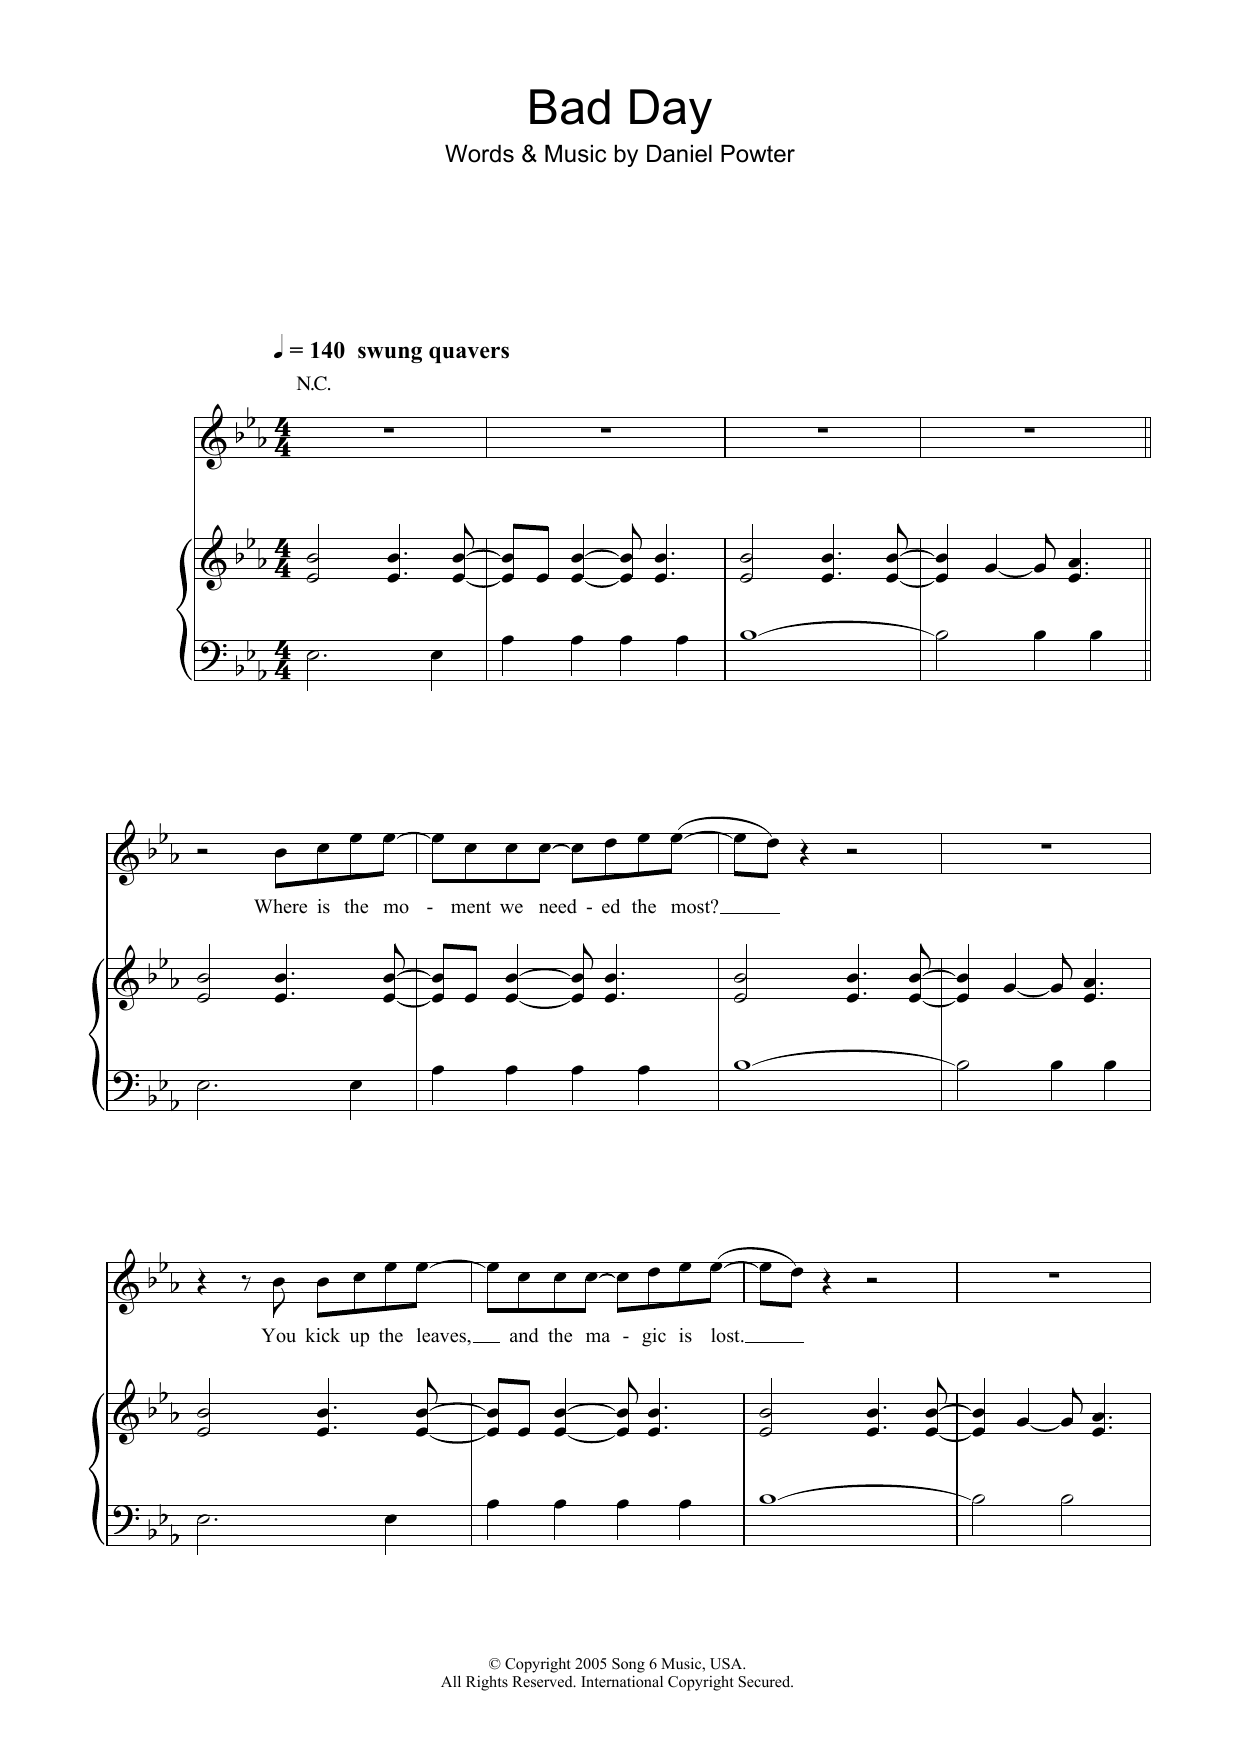 Daniel Powter Bad Day Sheet Music Notes & Chords for Violin - Download or Print PDF